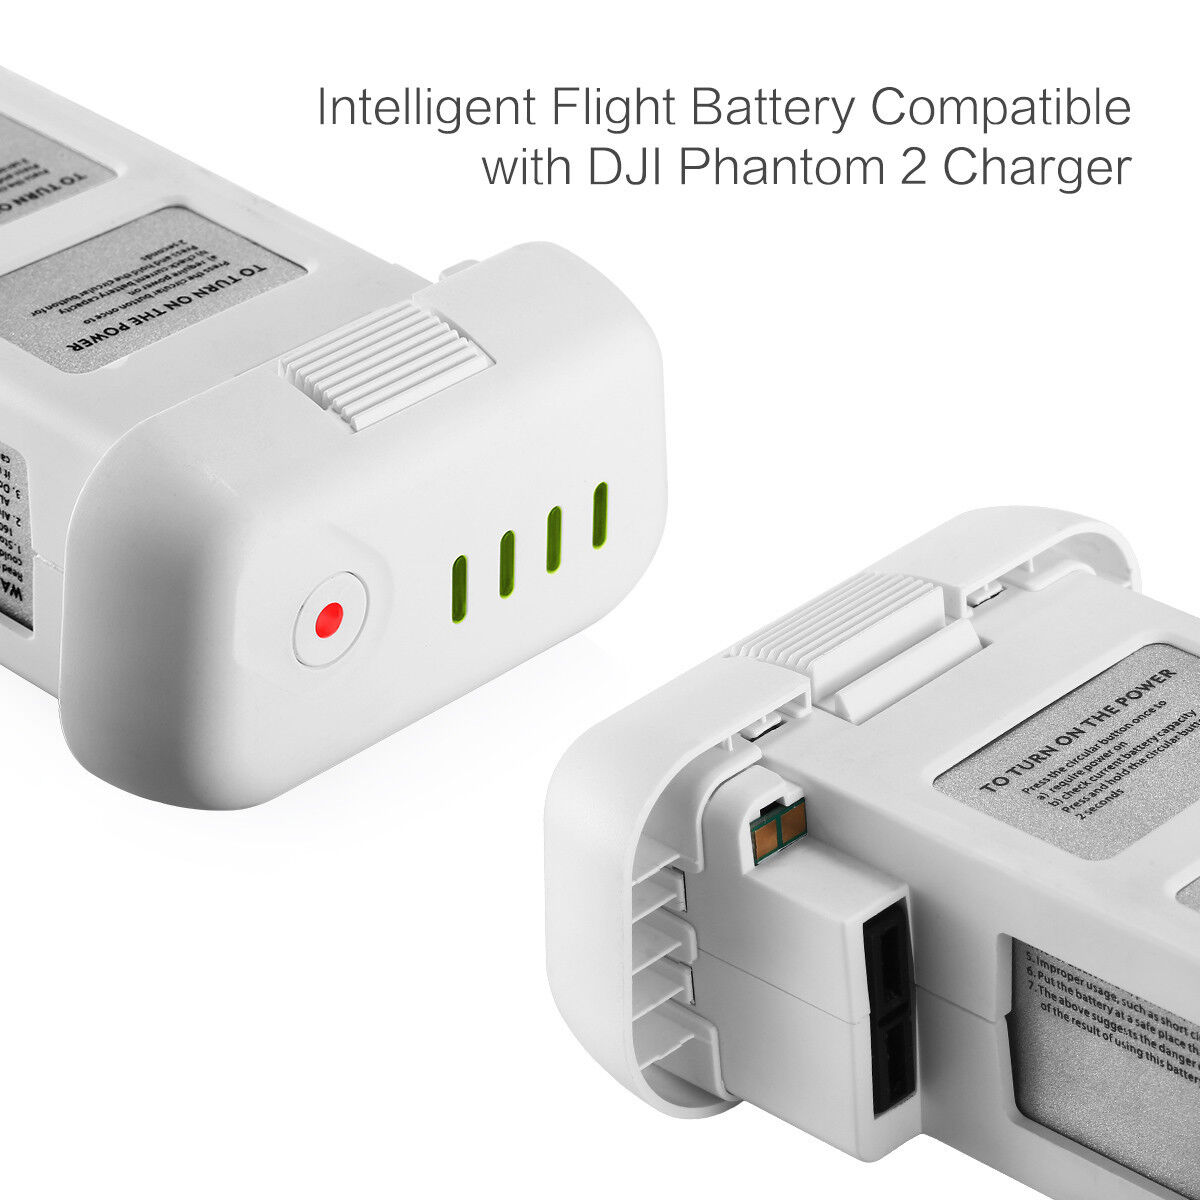 2x 5200mAh 11.1V Battery For DJI Phantom 2 Vision+ Plus Drone Quadcopter  Flight 709445114173 | eBay